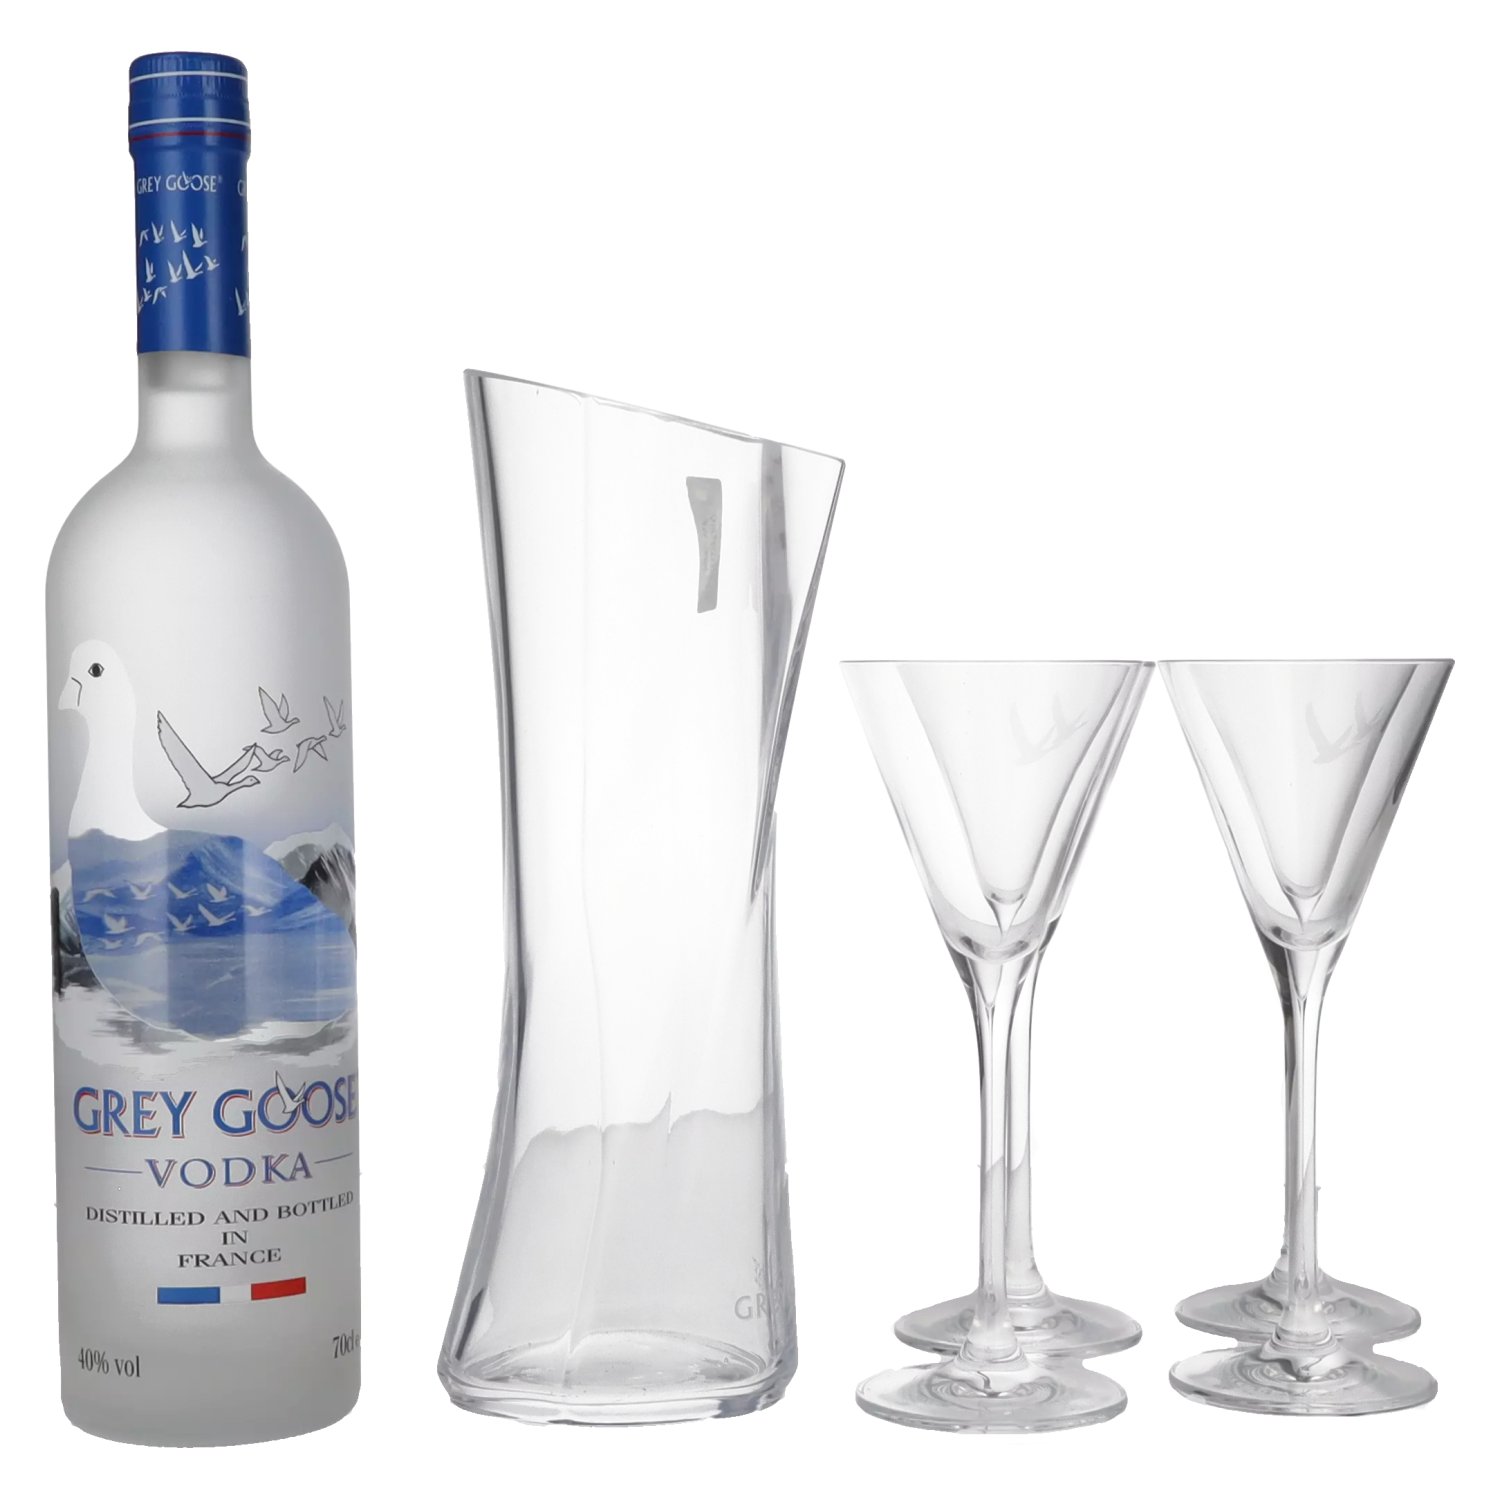 40% Grey Vodka Pack THE Vol. ULTIMATE GREY 0,7l in Holzkiste MARTINI GOOSE Goose